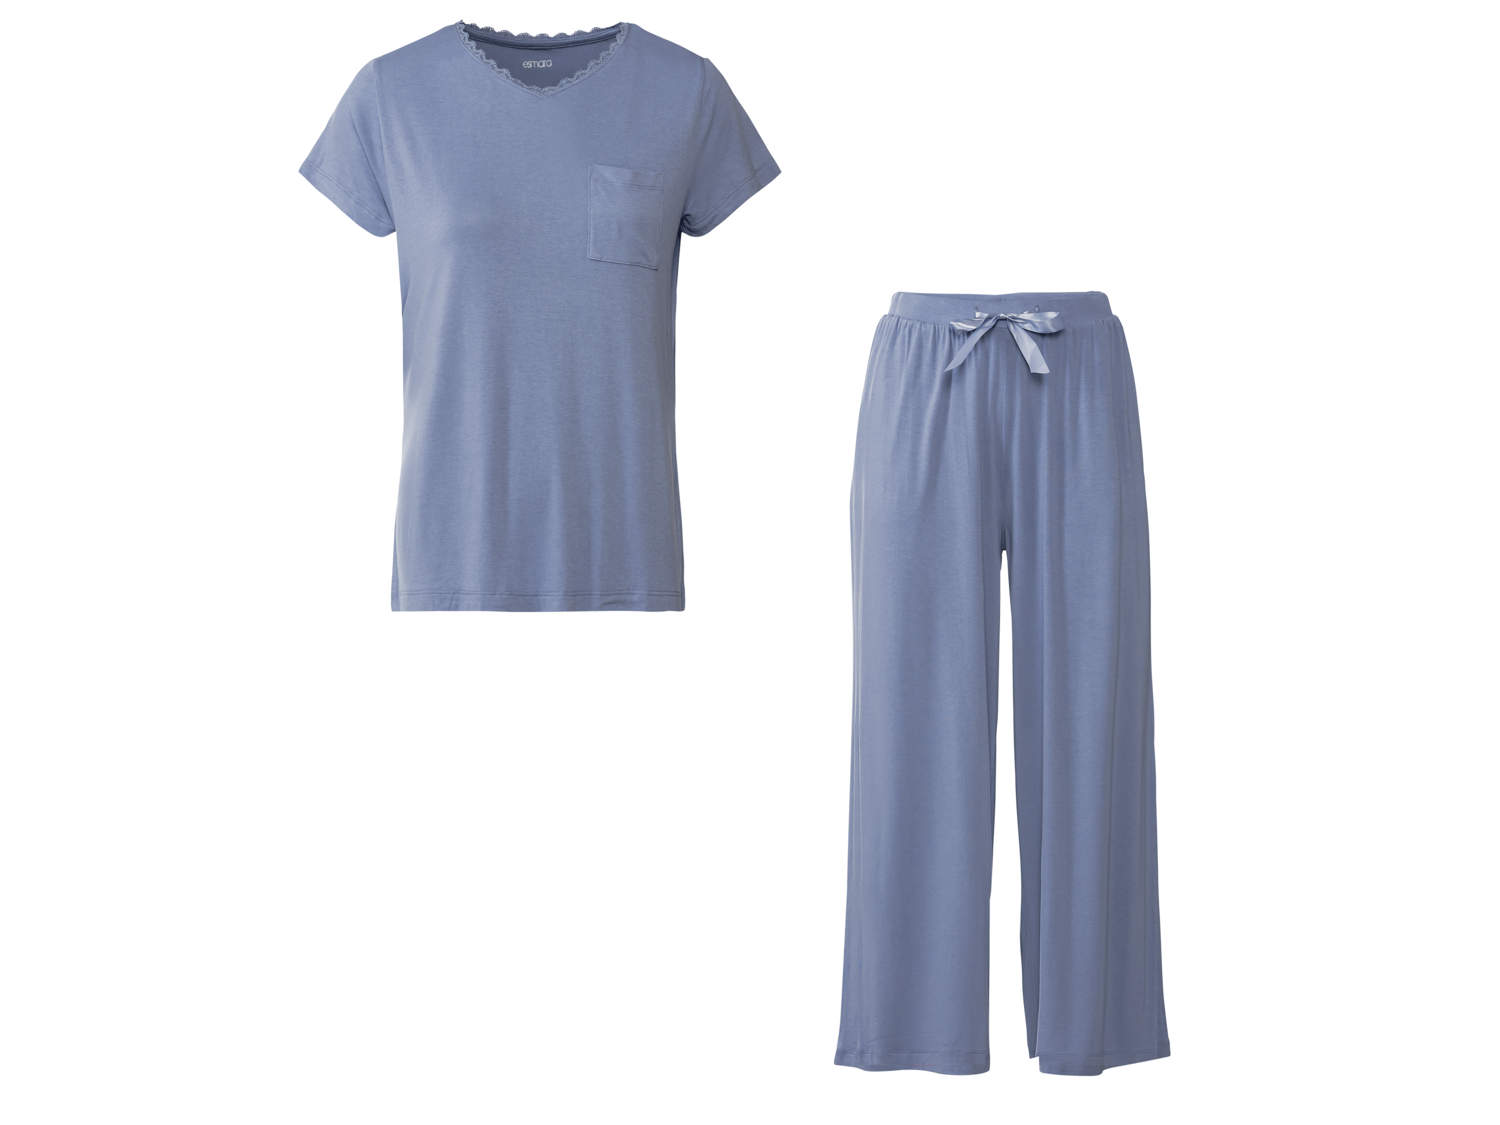 Pyjama femme , le prix 12.99 &#8364; 
- Pyjama femme au choix :
- Du S au XL ...